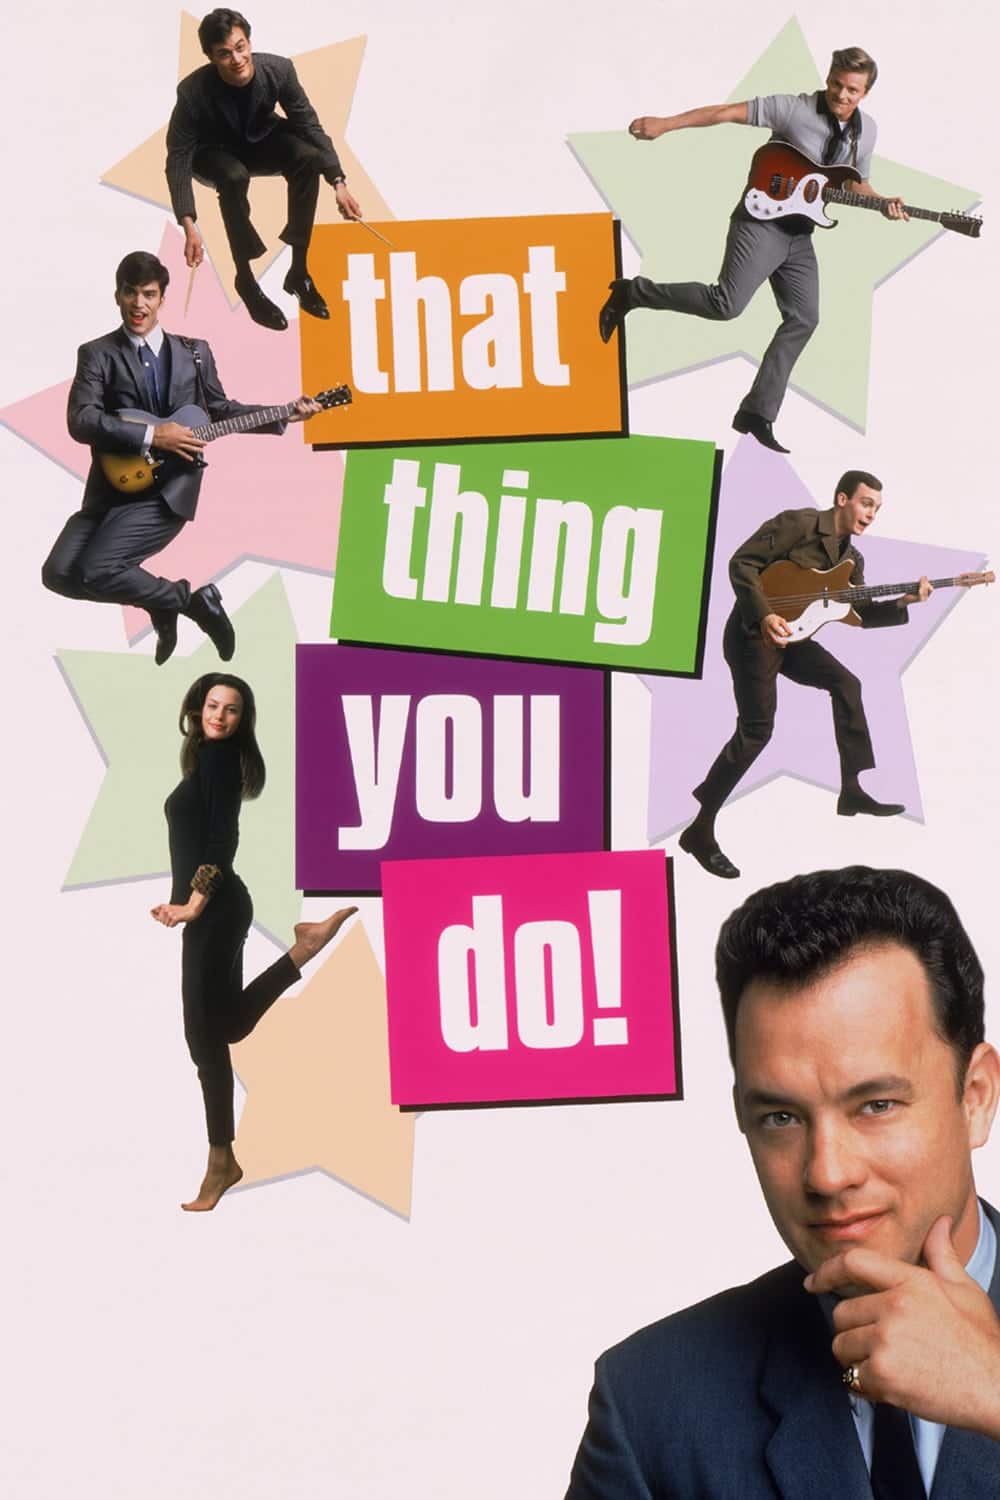 Plakat von "That Thing You Do!"